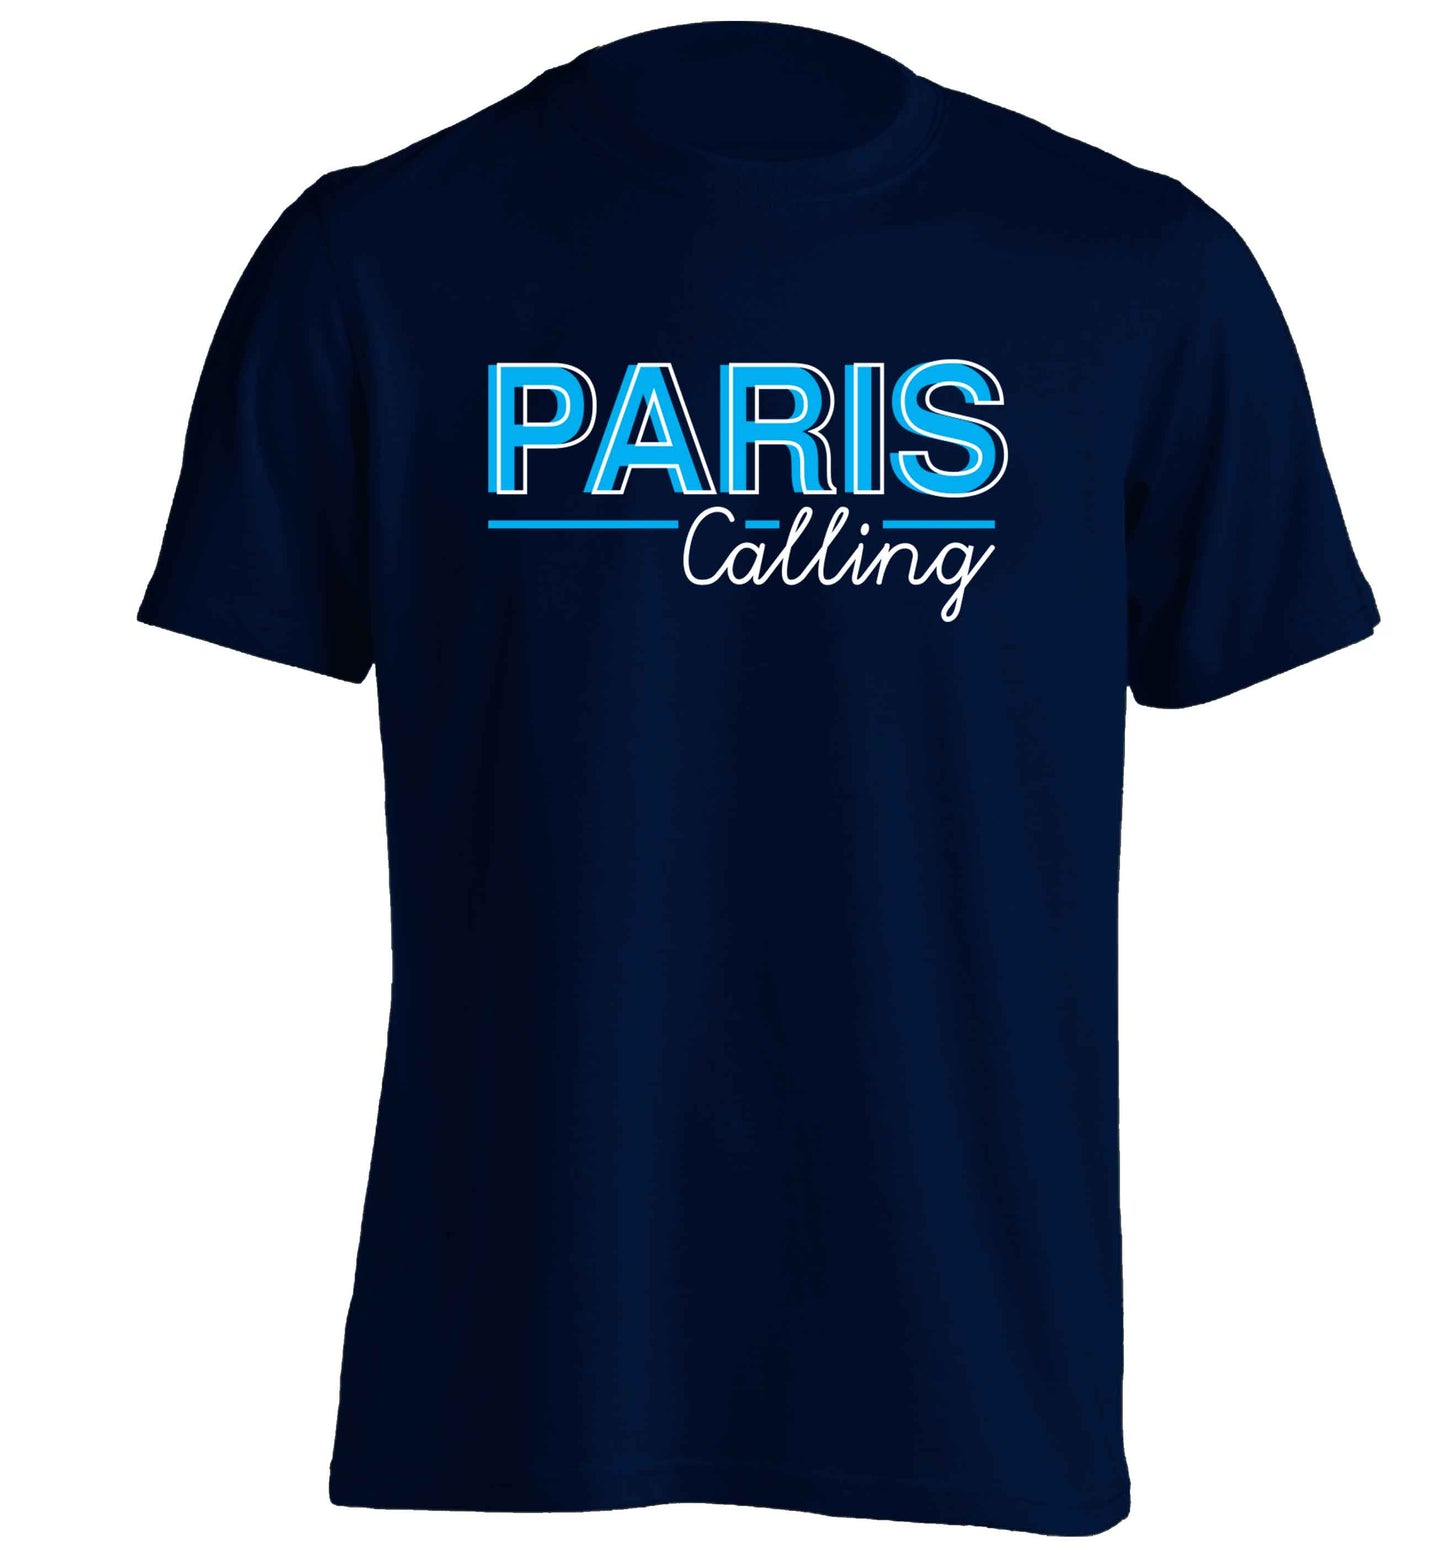 Paris calling adults unisex navy Tshirt 2XL